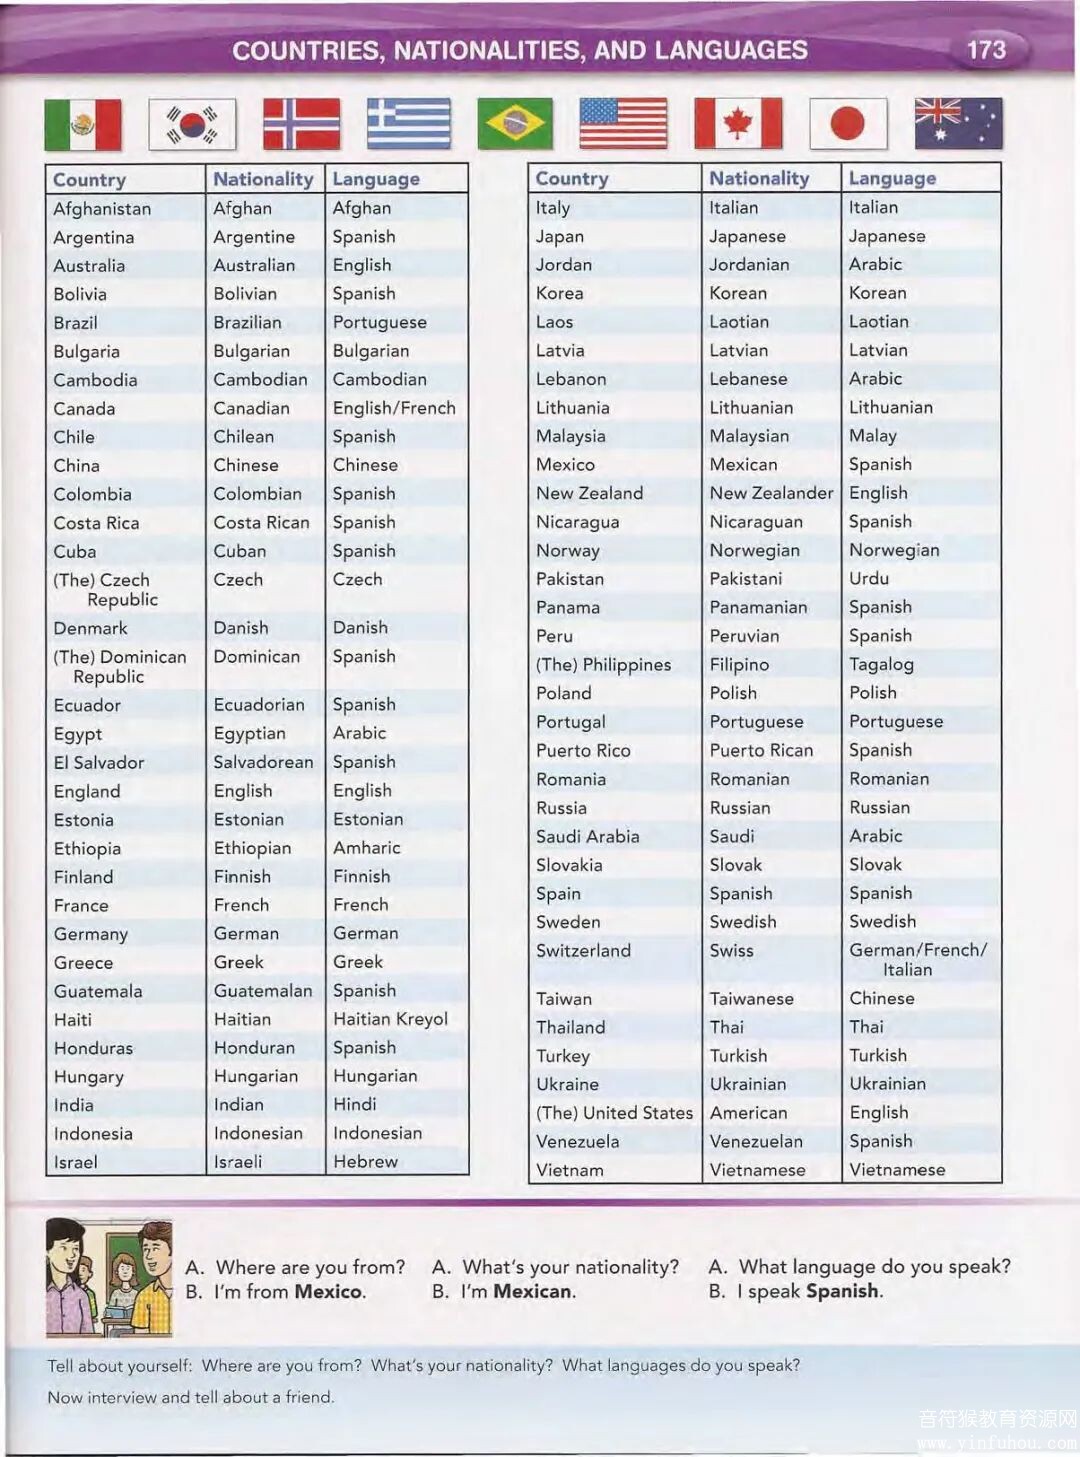 朗文词典情景单词书Word by Word Picture Dictionary 电子版pdf+音频